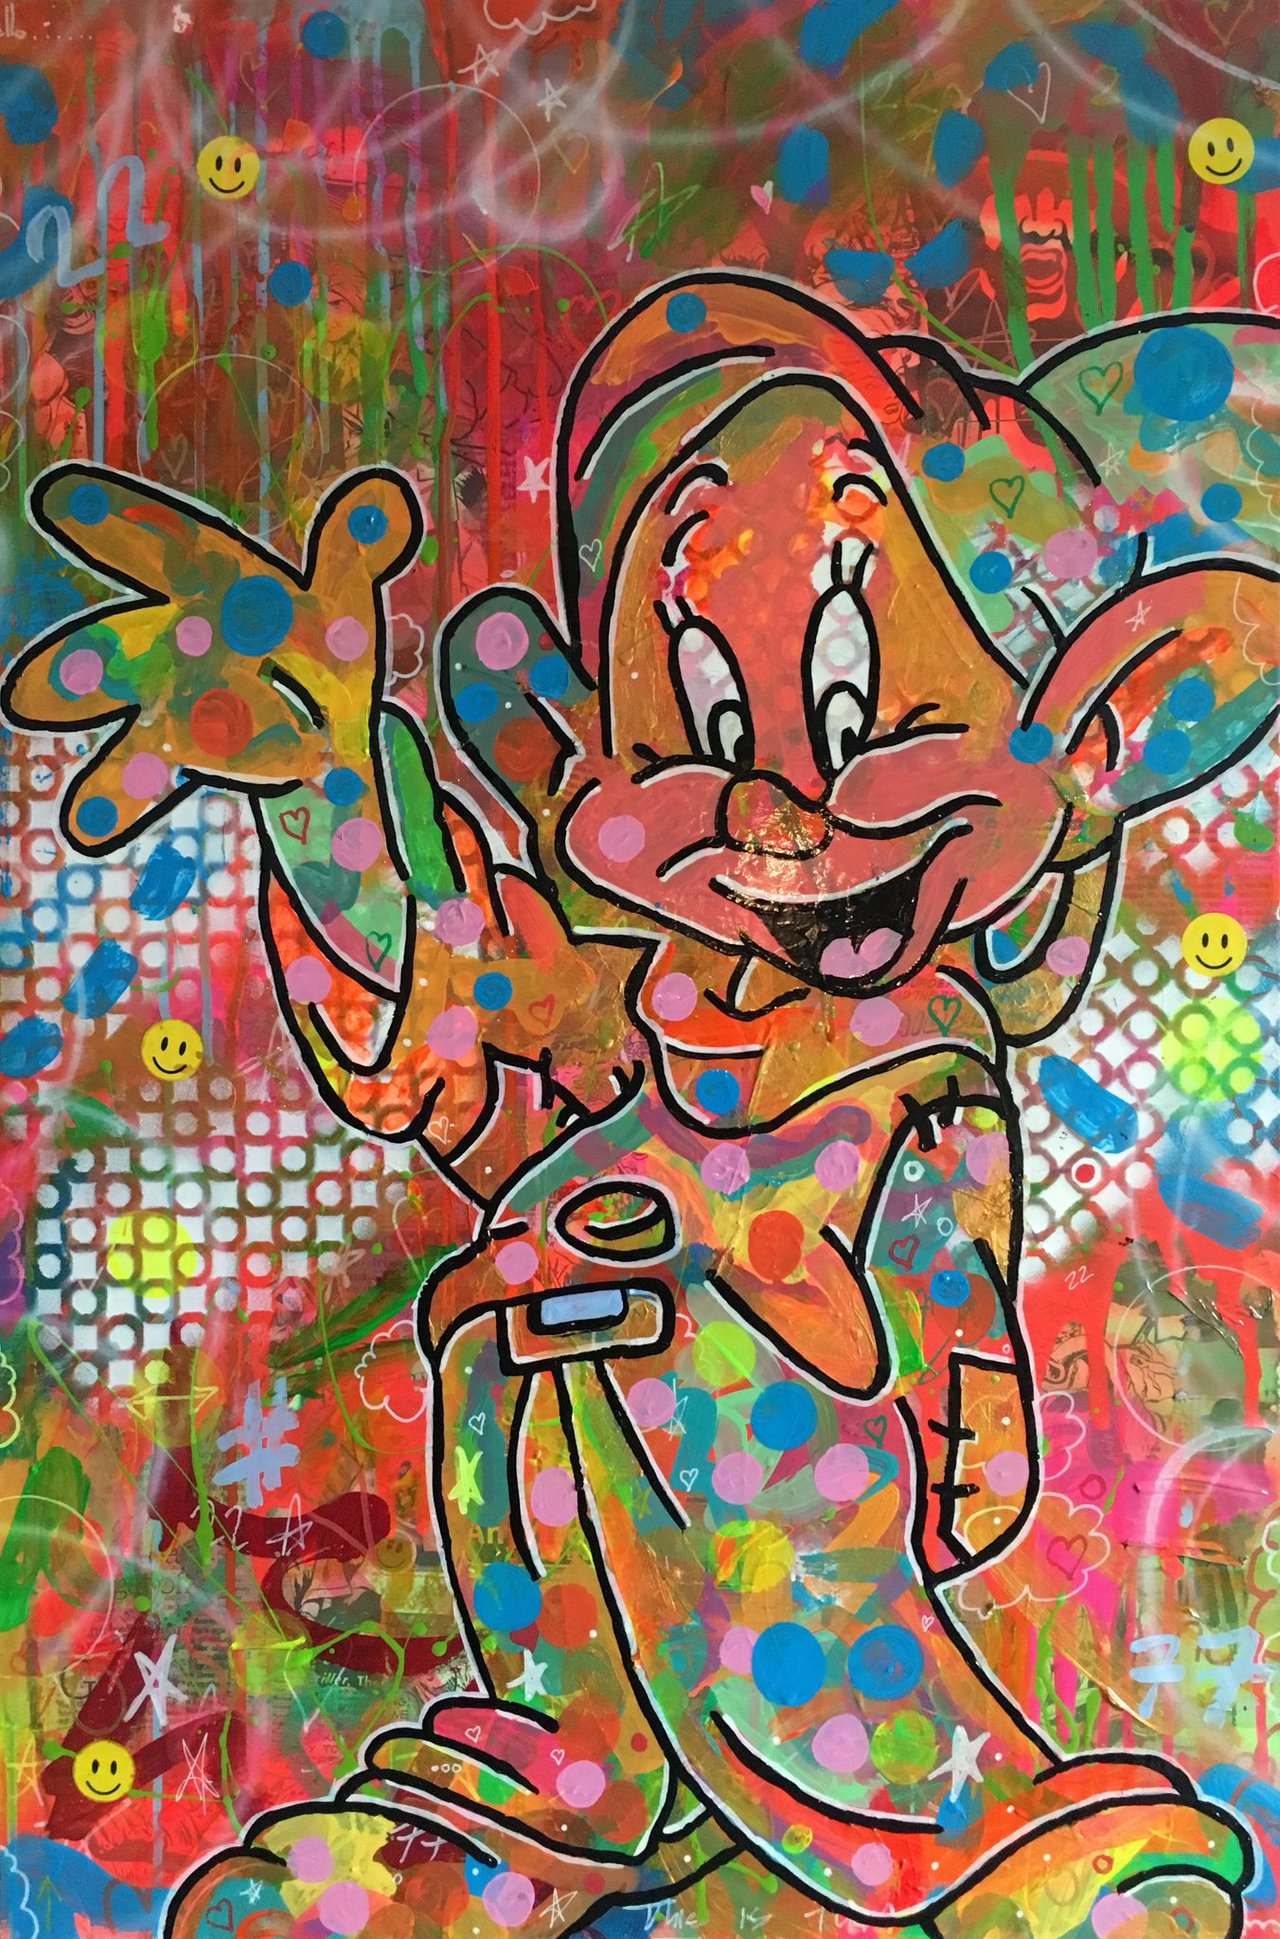 Back in the day by Barrie J Davies 2018 #streetart #popart #graffiti https://barriejdavies.info/products/back-in-the-day-by-barrie-j-davies-2018 https://t.co/FY7hZZyCHw